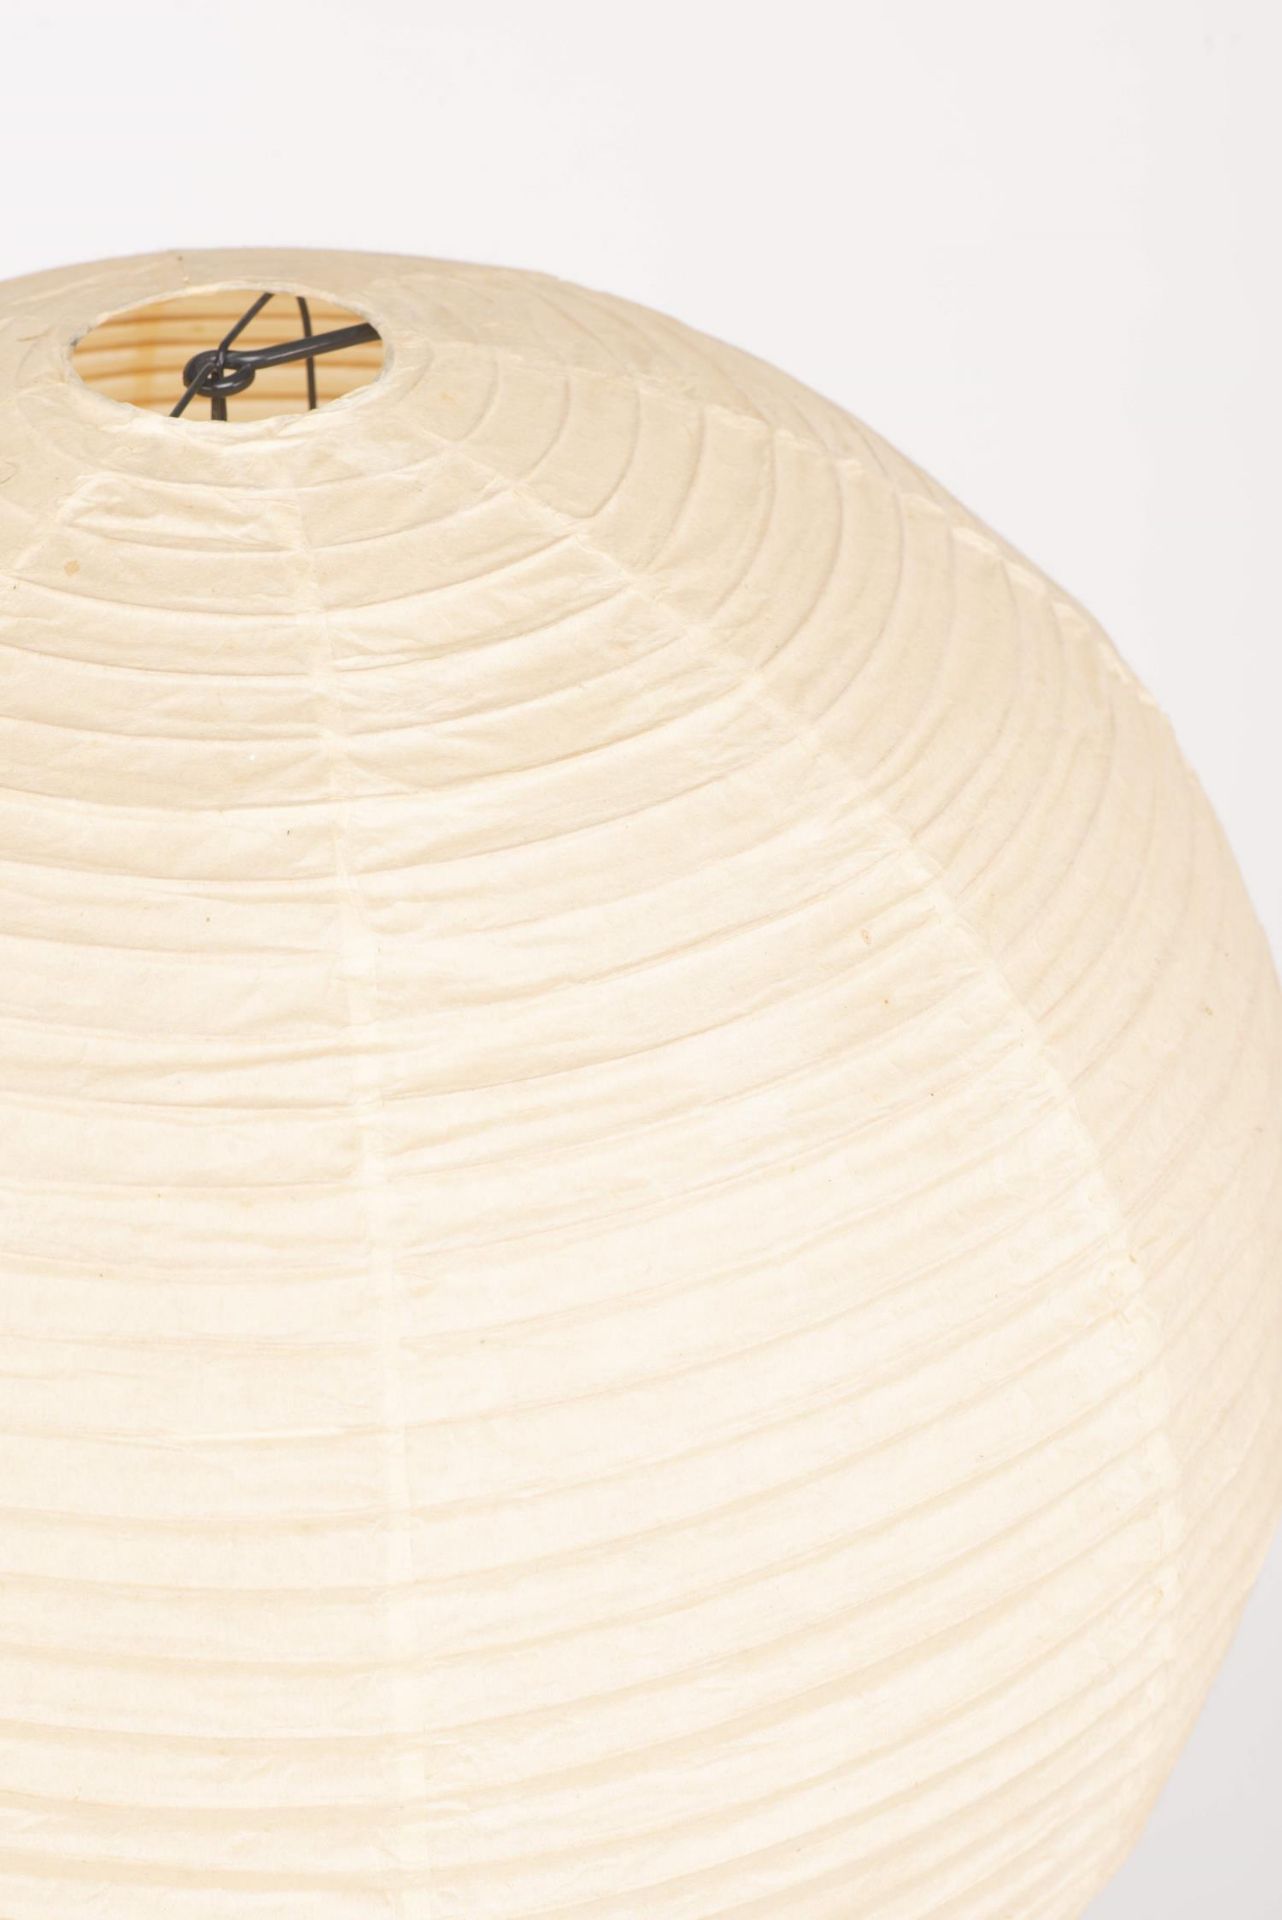 Isamu Noguchi (1904-1988), lampadaire en fer, papier Washi et bambou - Image 6 of 8